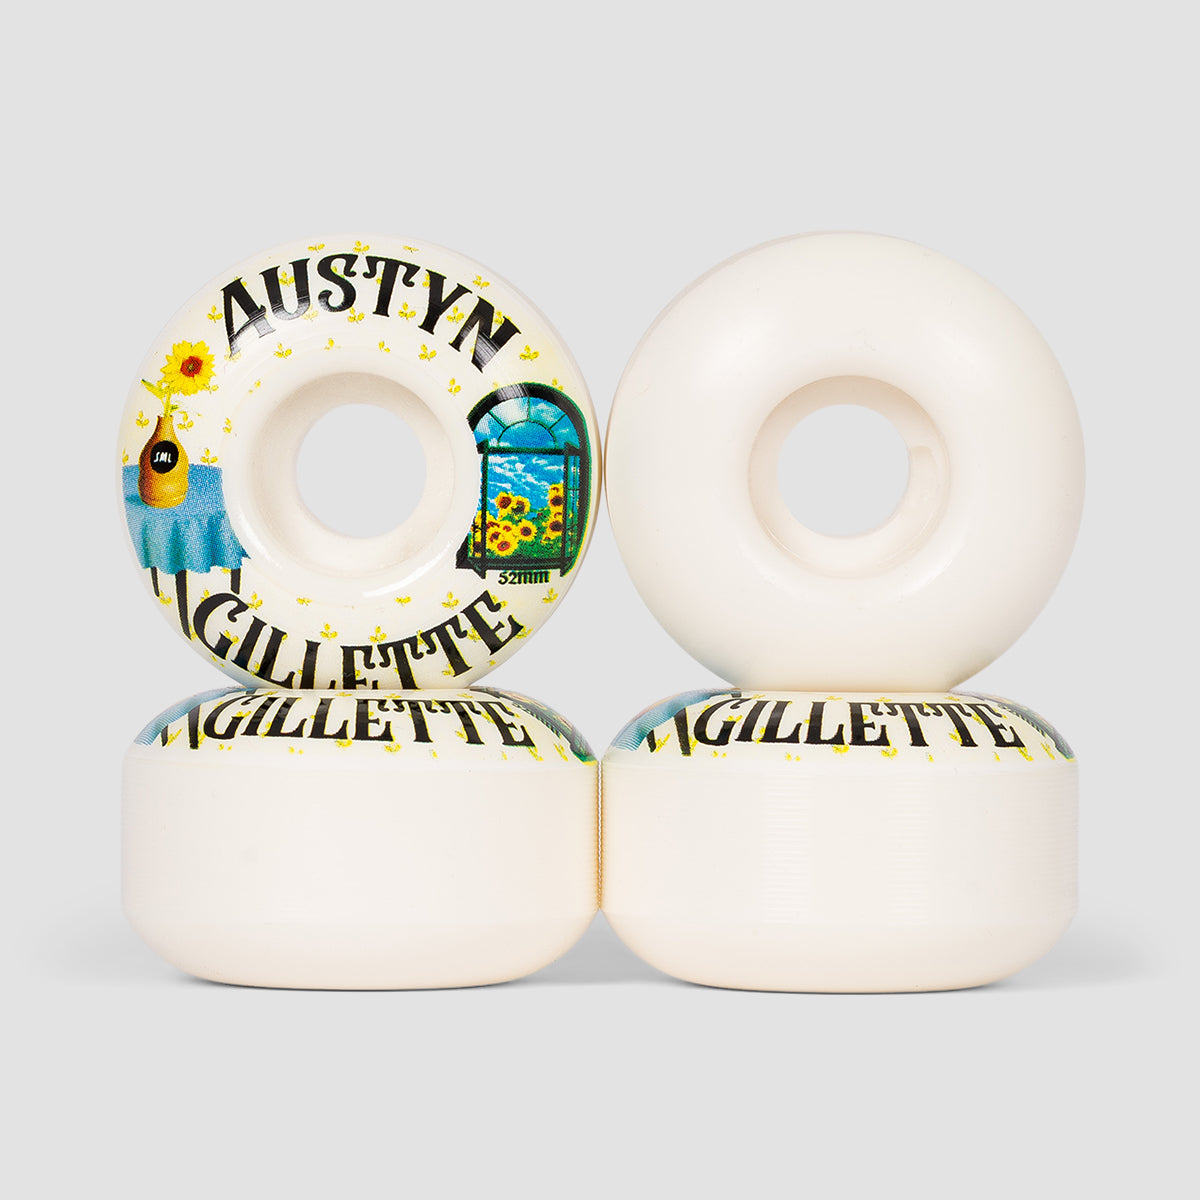 SML Still Life Series Austyn Gillette OG Wide 99A Skateboard Wheels 52mm